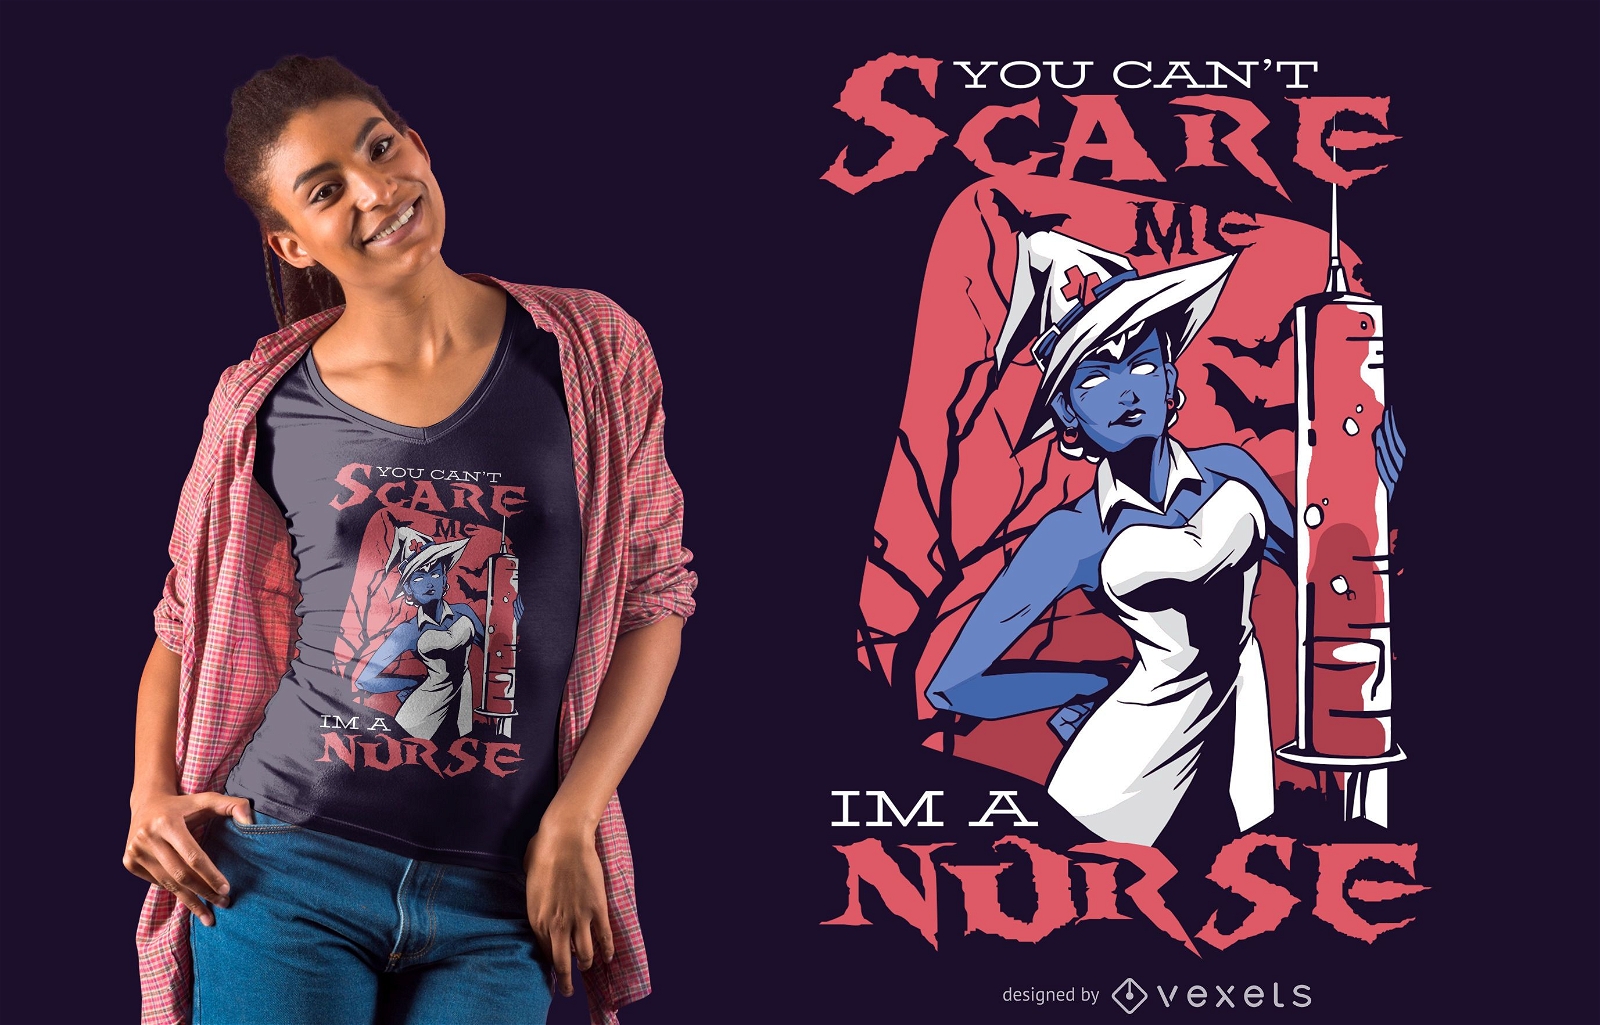 Scary nurse t-shirt design